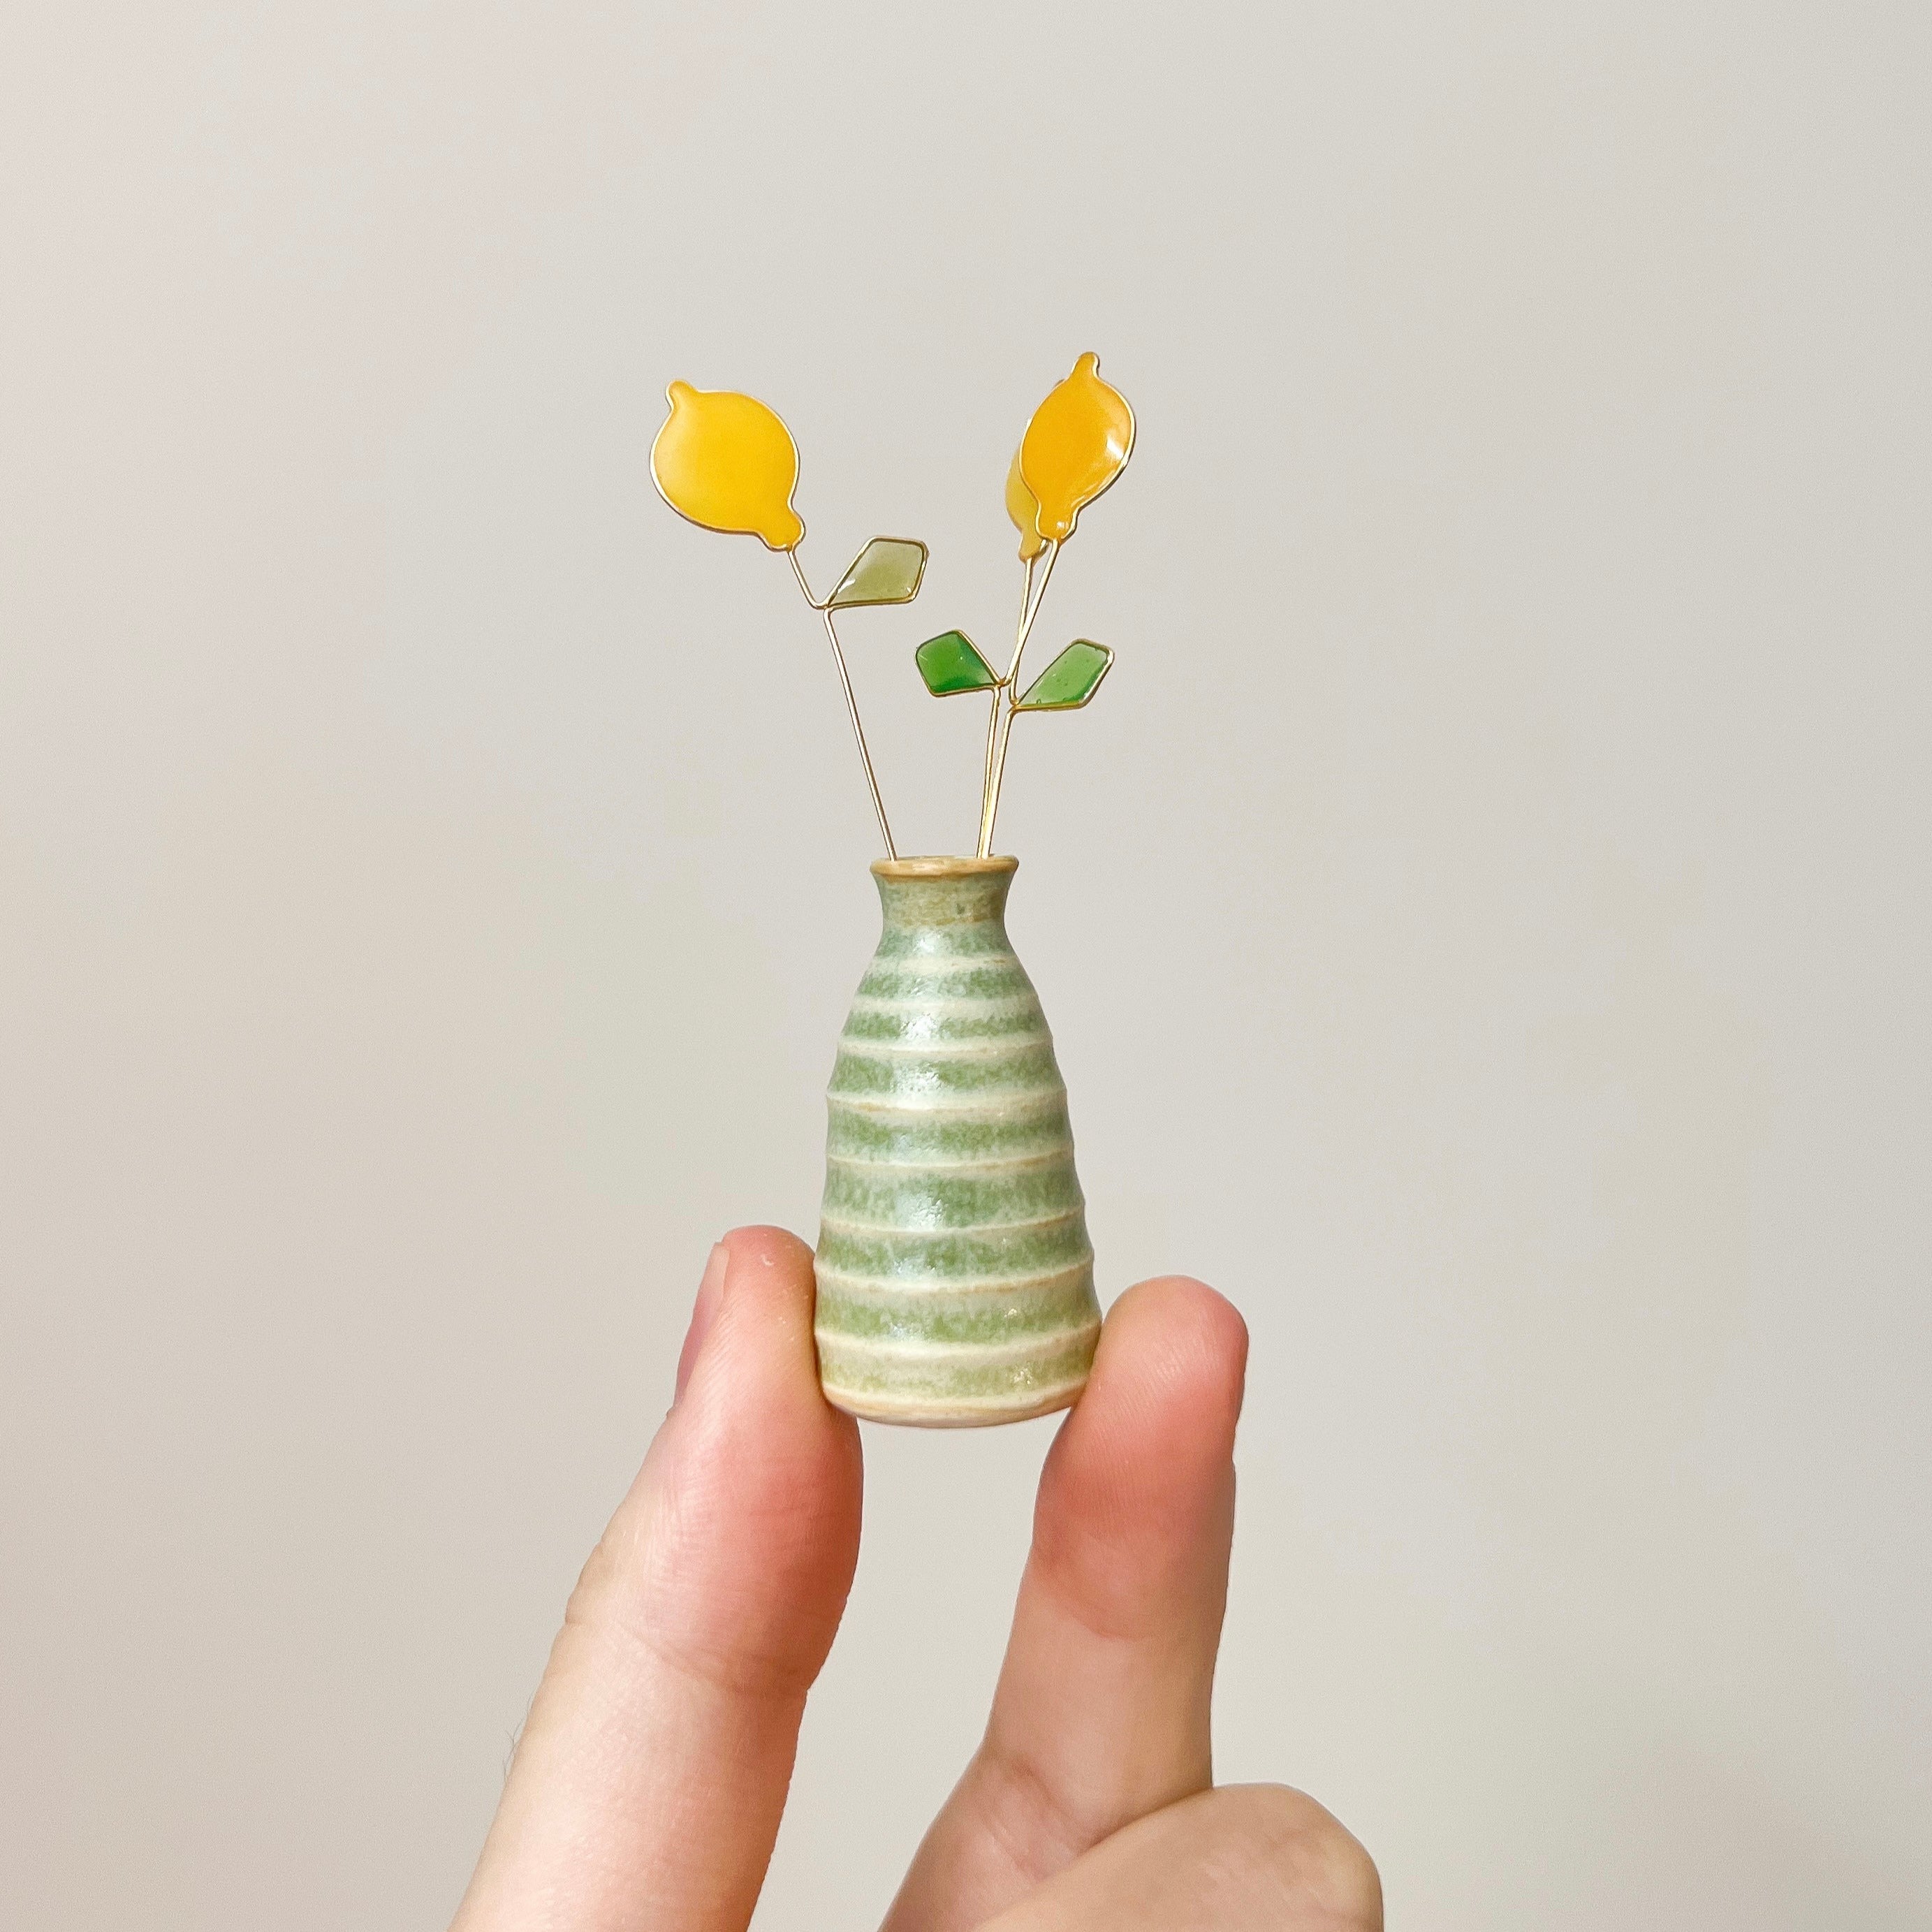 Preorder| Miniature Vases By Singing Tree Design